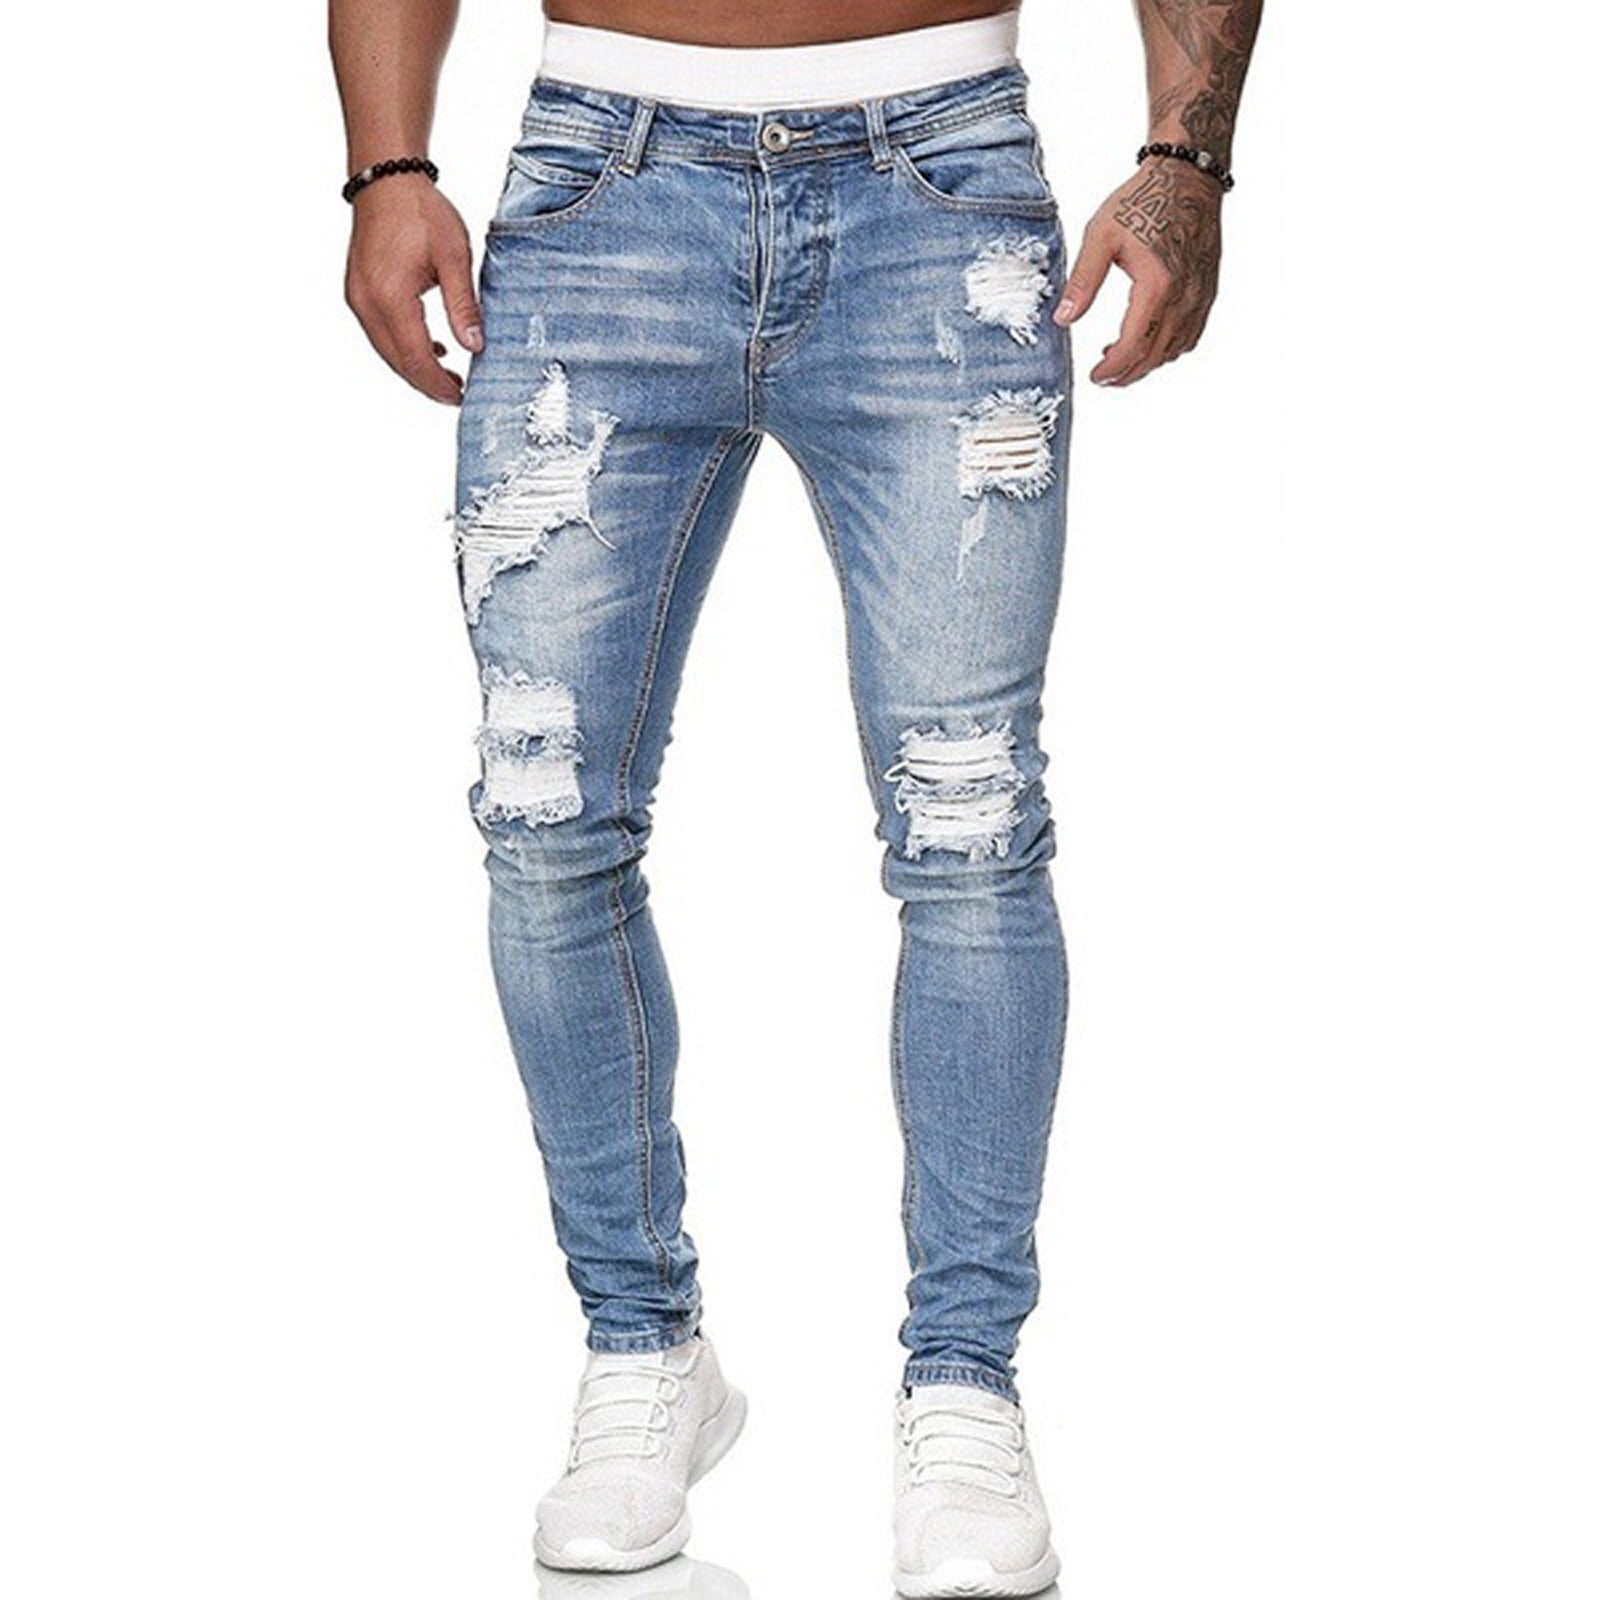 Centralize Playful Northeast Binpure Men's Stretch Skinny Ripped Jeans Super Comfy Distressed Denim Pants  - Walmart.com